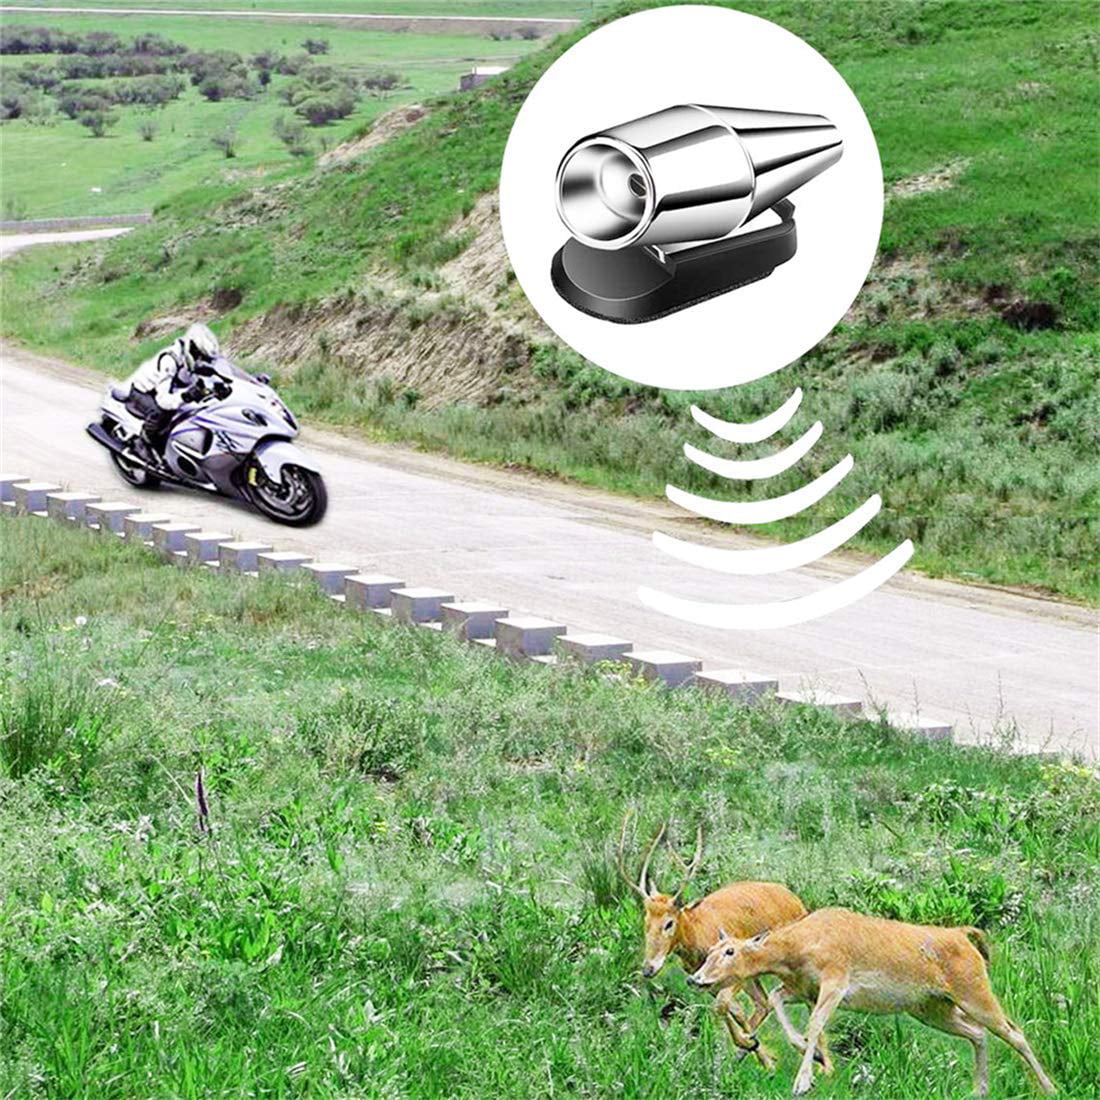 4 PCS Deer Whistles for Car Deer Warning Devices - Car Safety